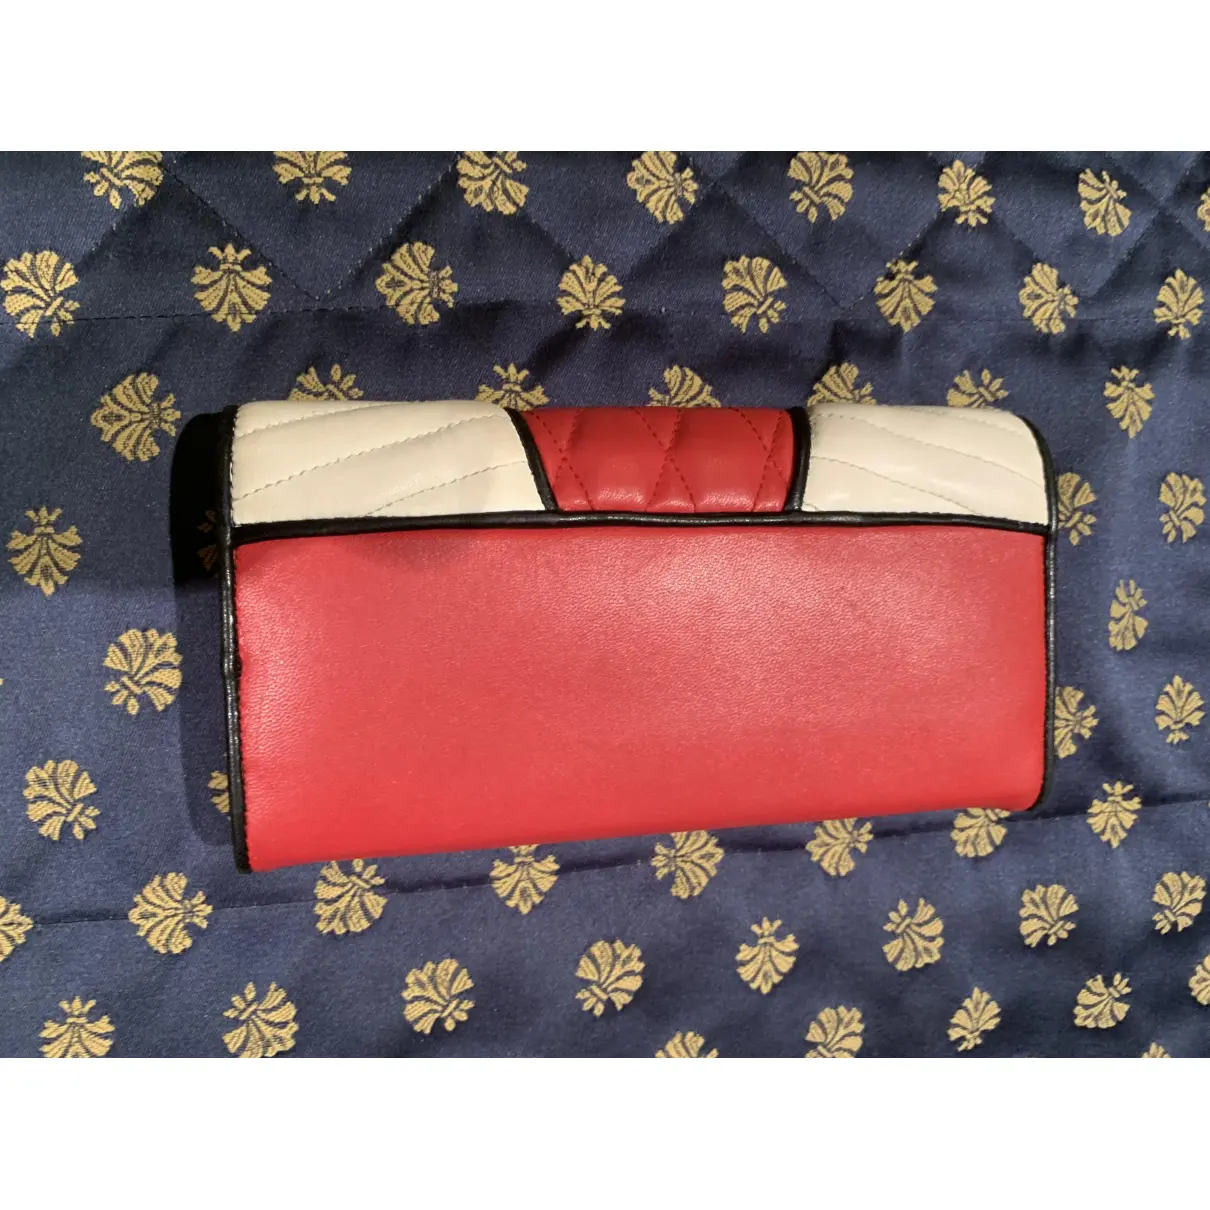 Buy Miu Miu Leather wallet online